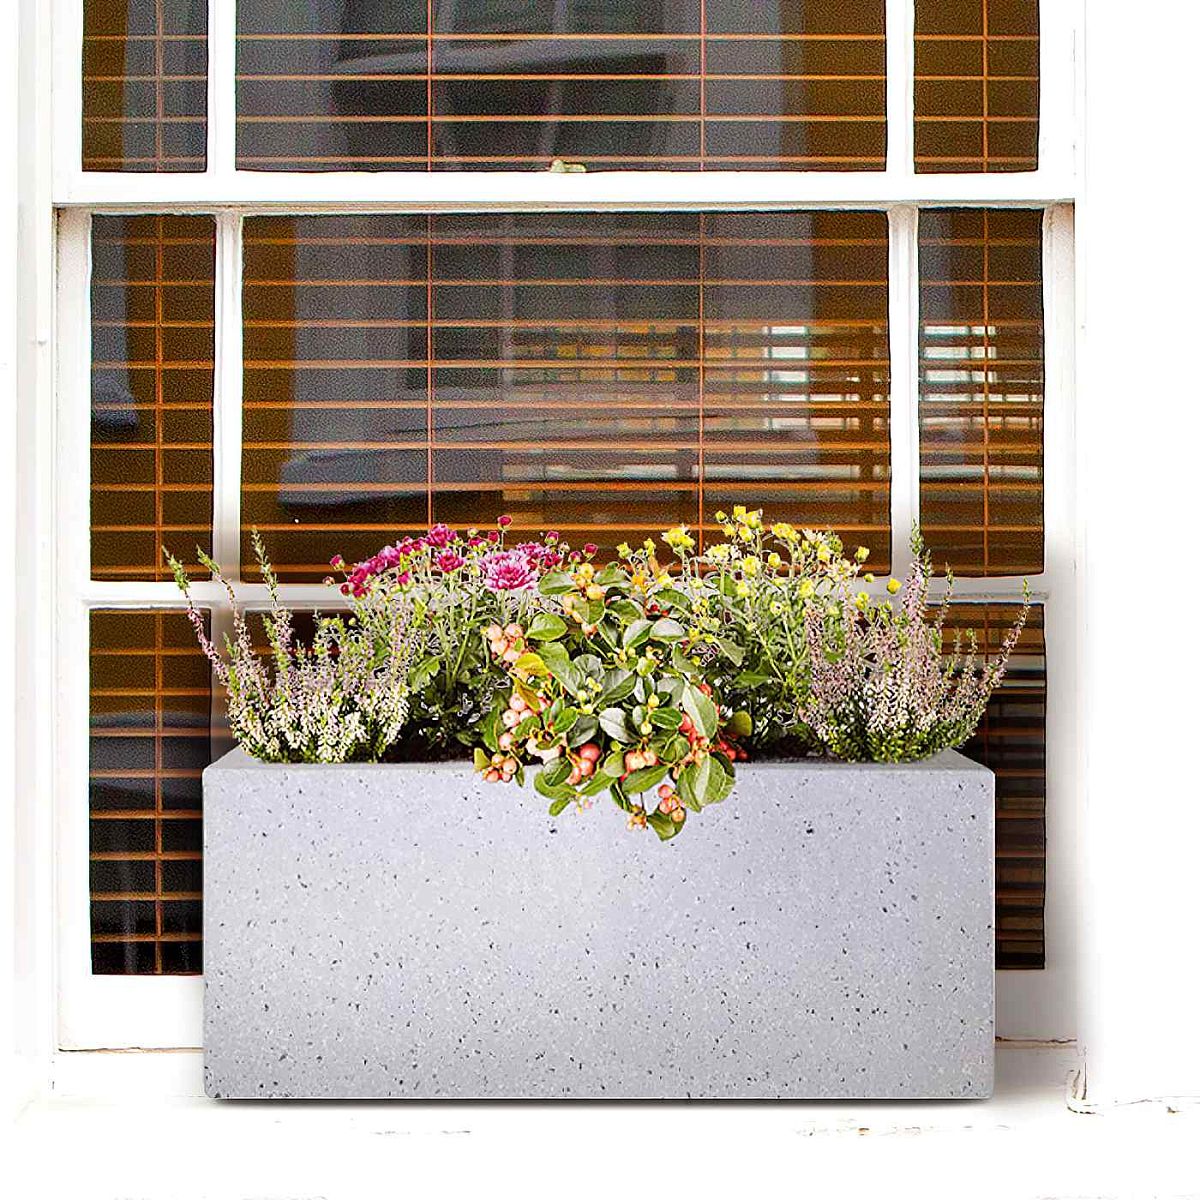 Window Box Light Concrete Planter by Idealist Lite